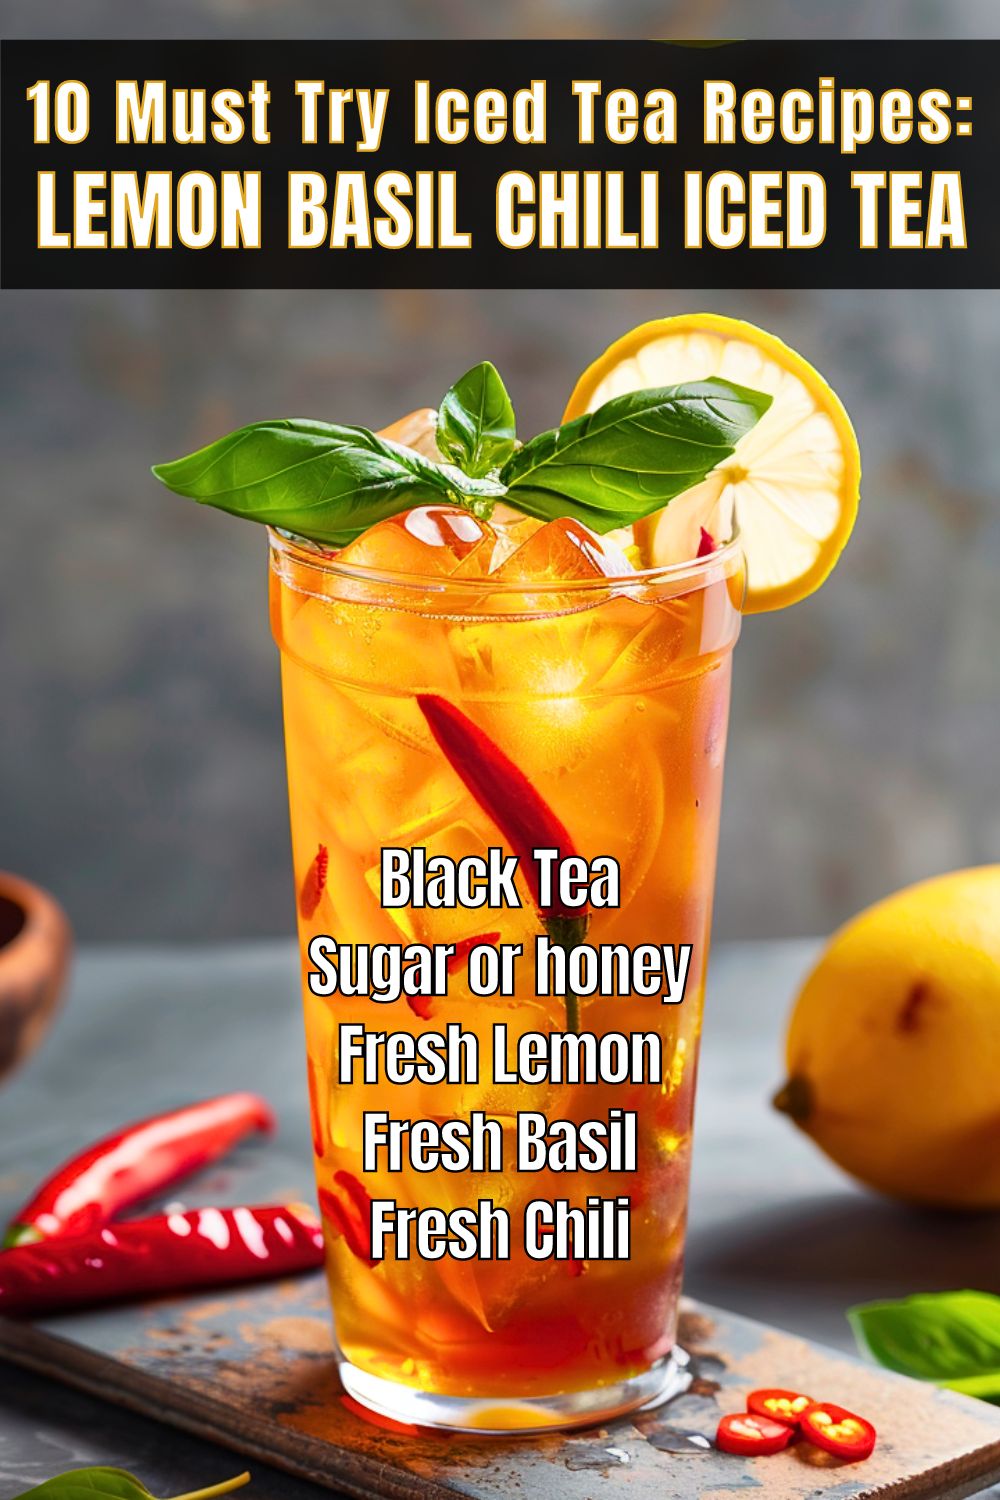 Iced Tea Recipes Lemon Basil Chili Iced Tea